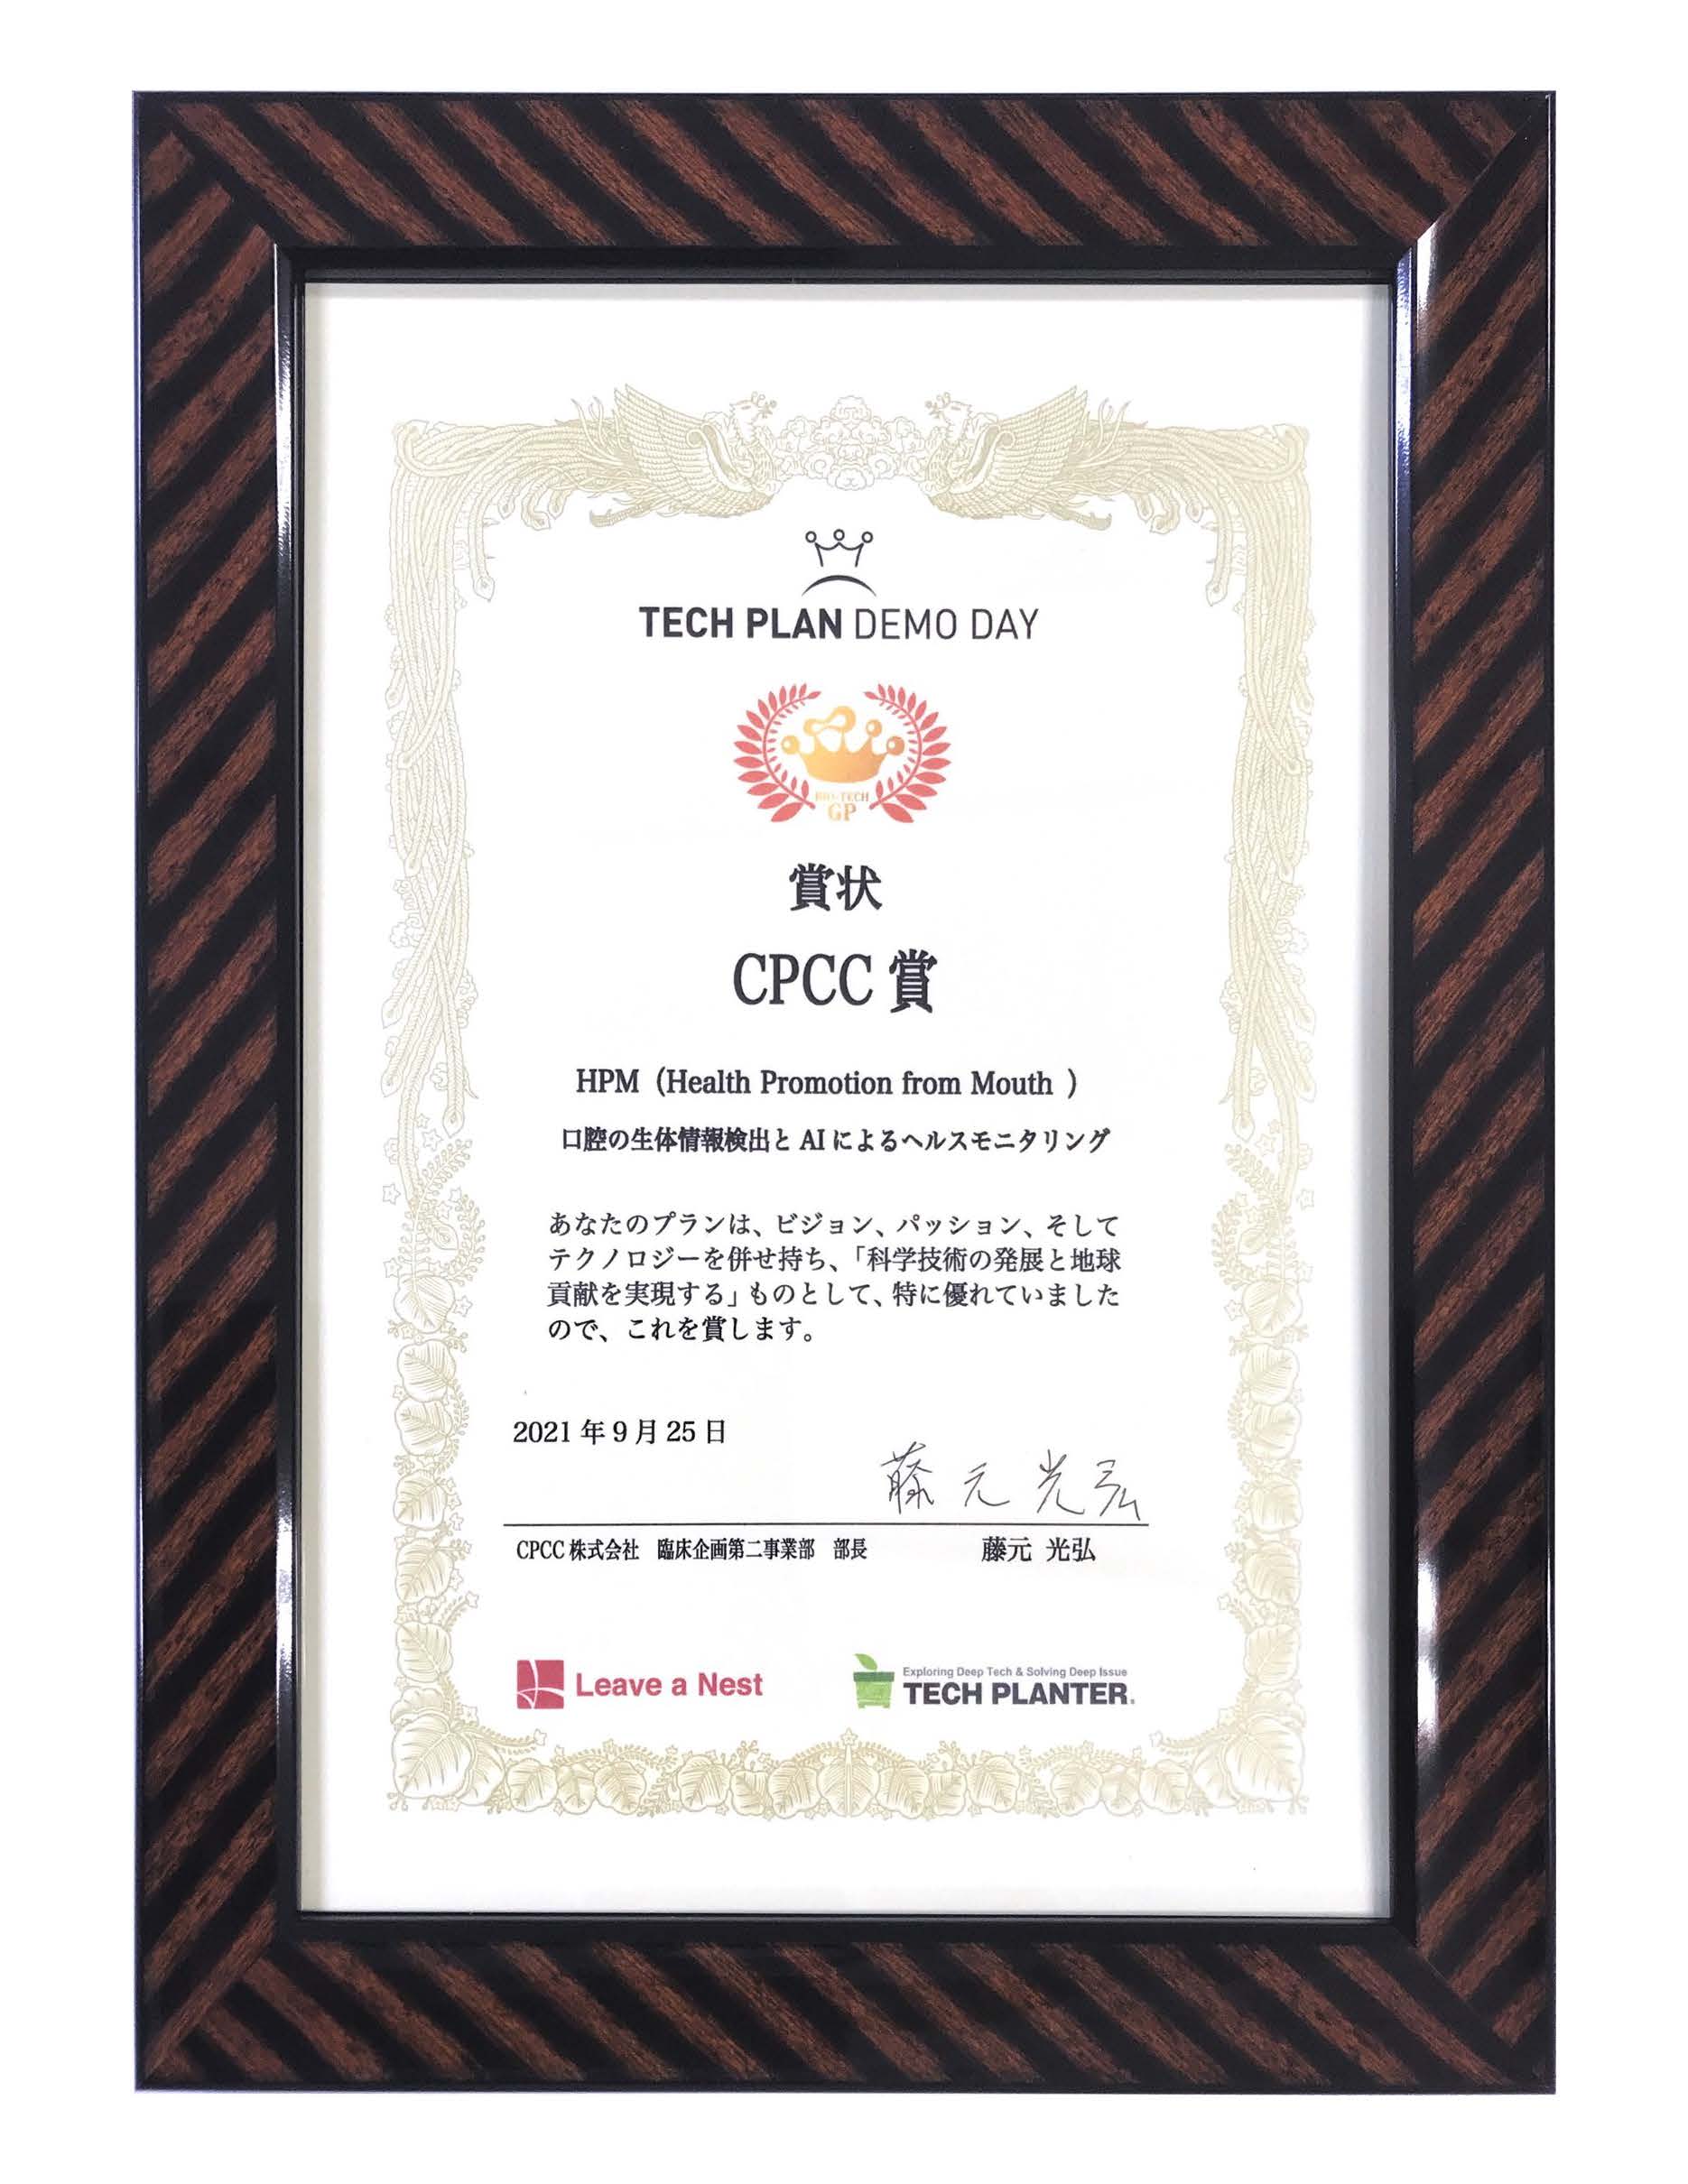 Dr. Suzuki has received the CPCC award